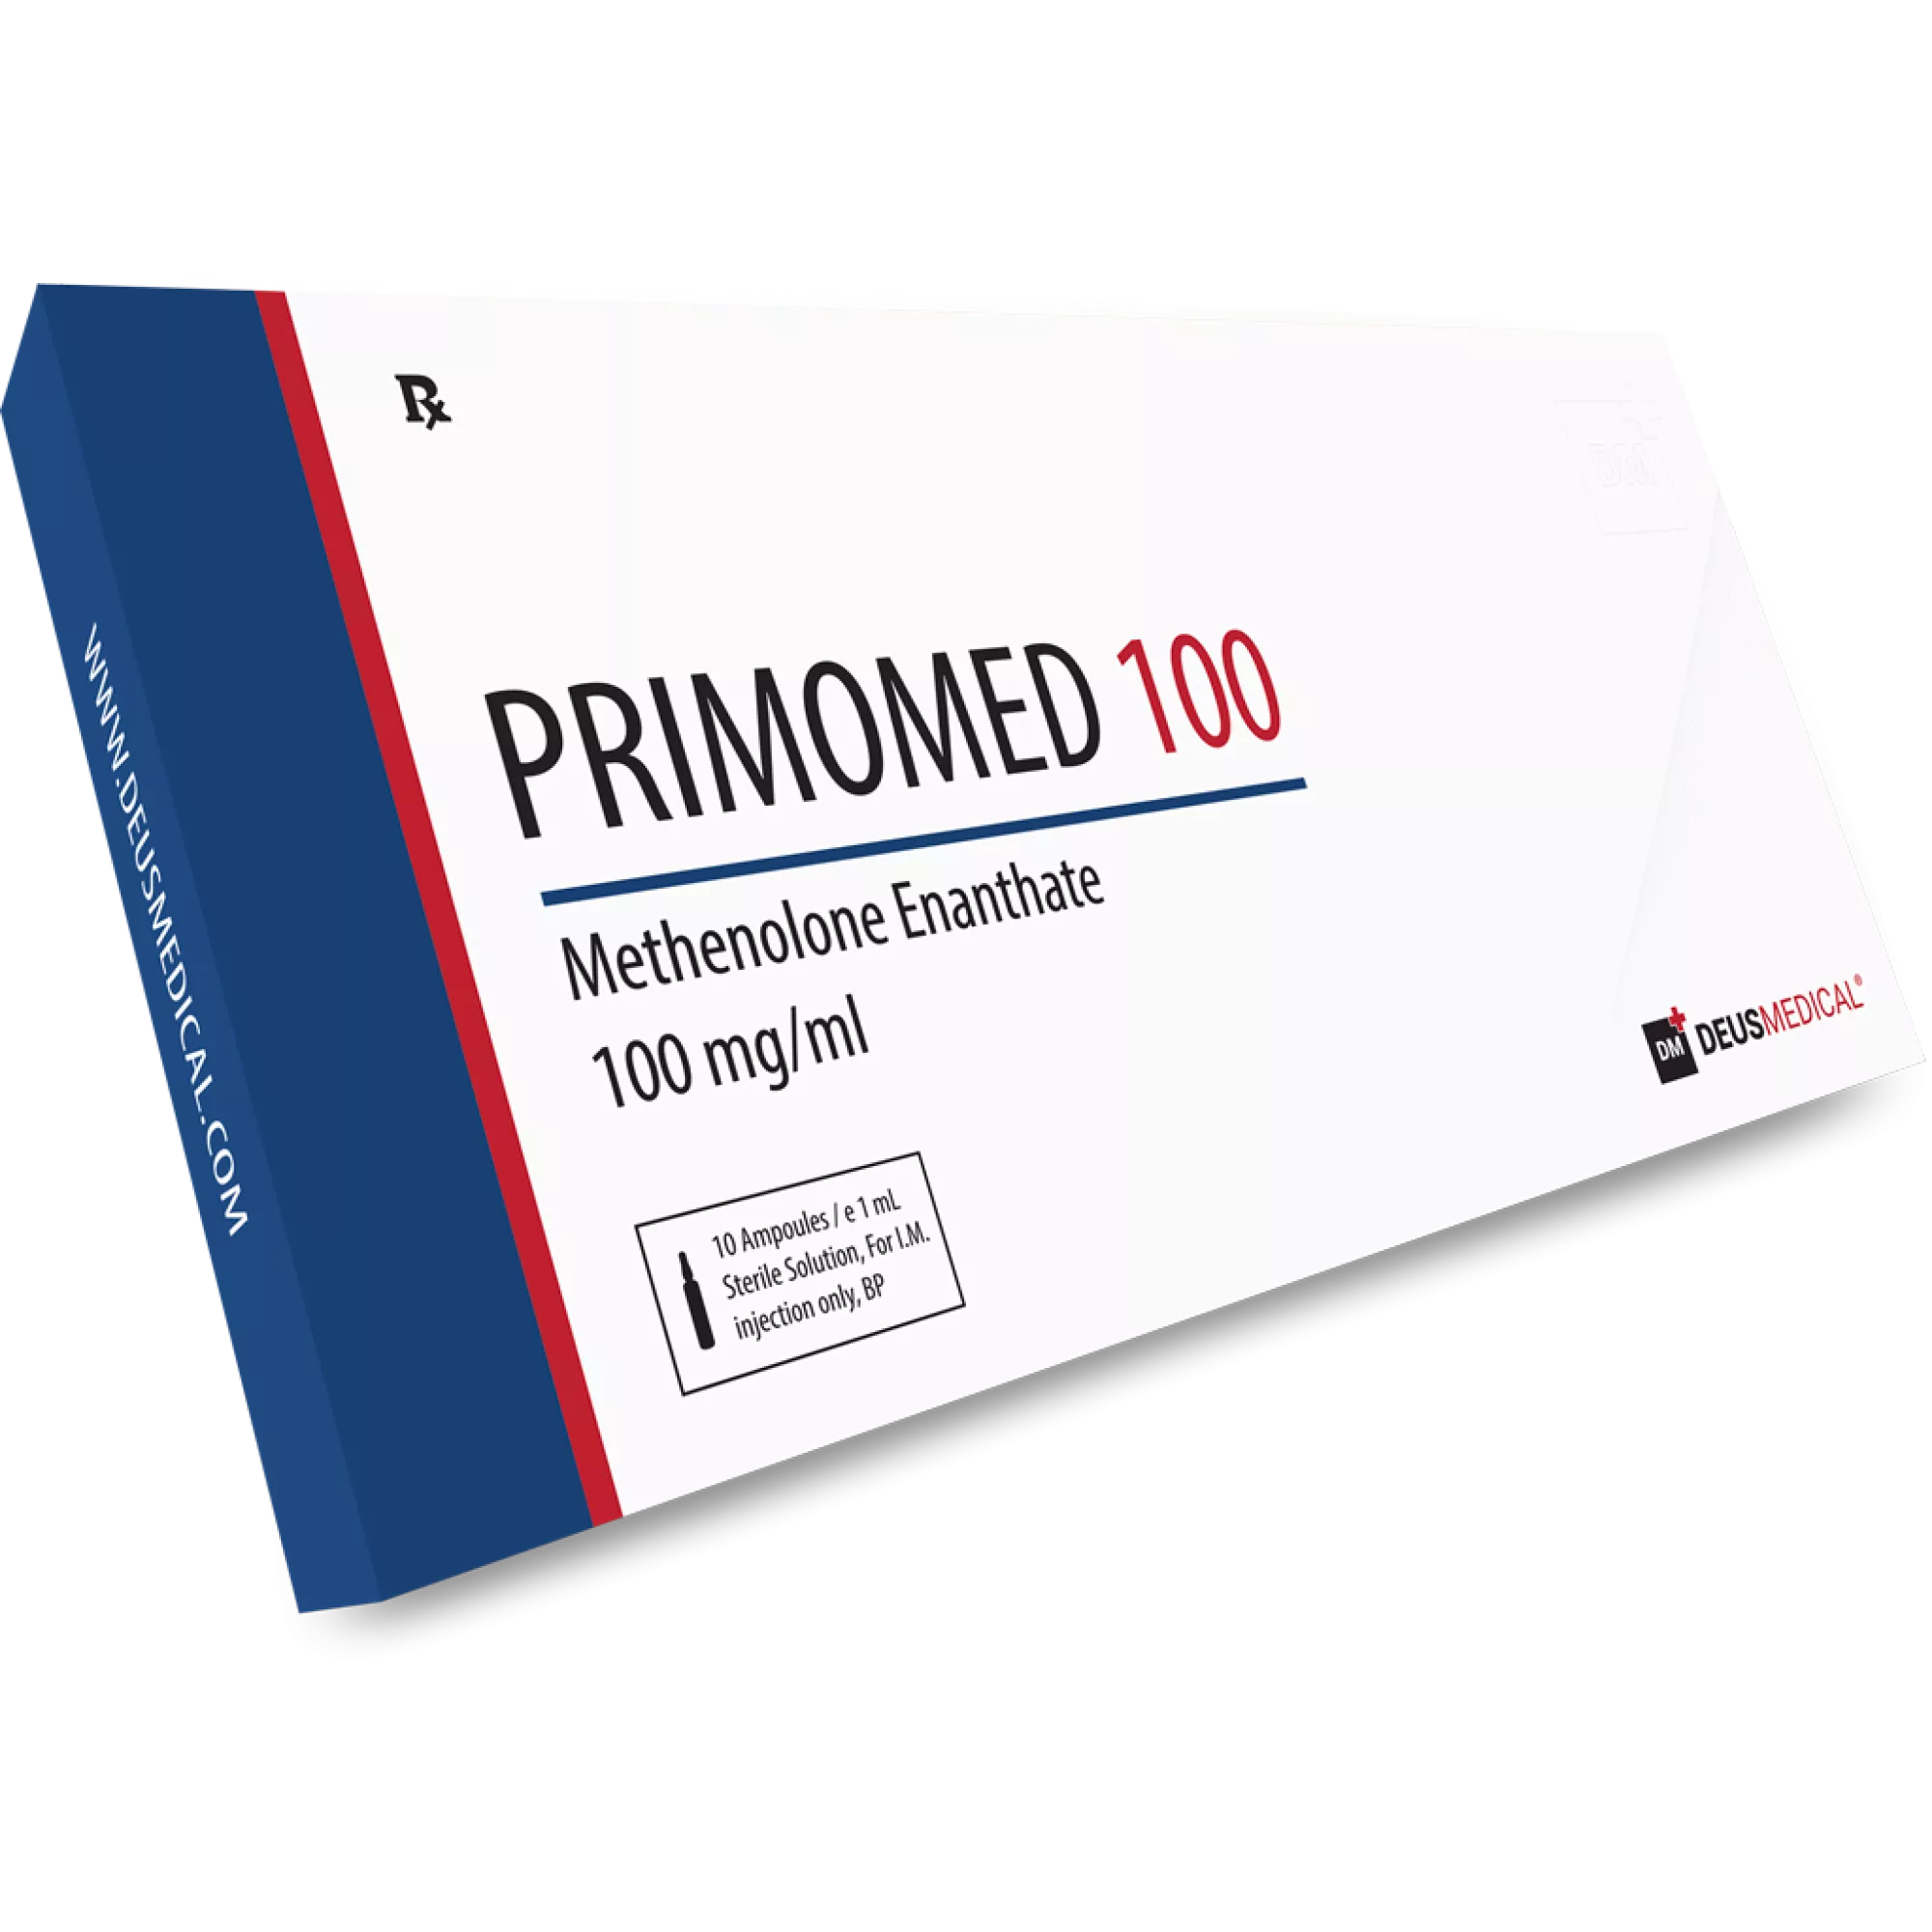 PRIMOMED 100 (Methenolone Enanthate), Deus Medical, köp steroider online - www.deuspower.shop